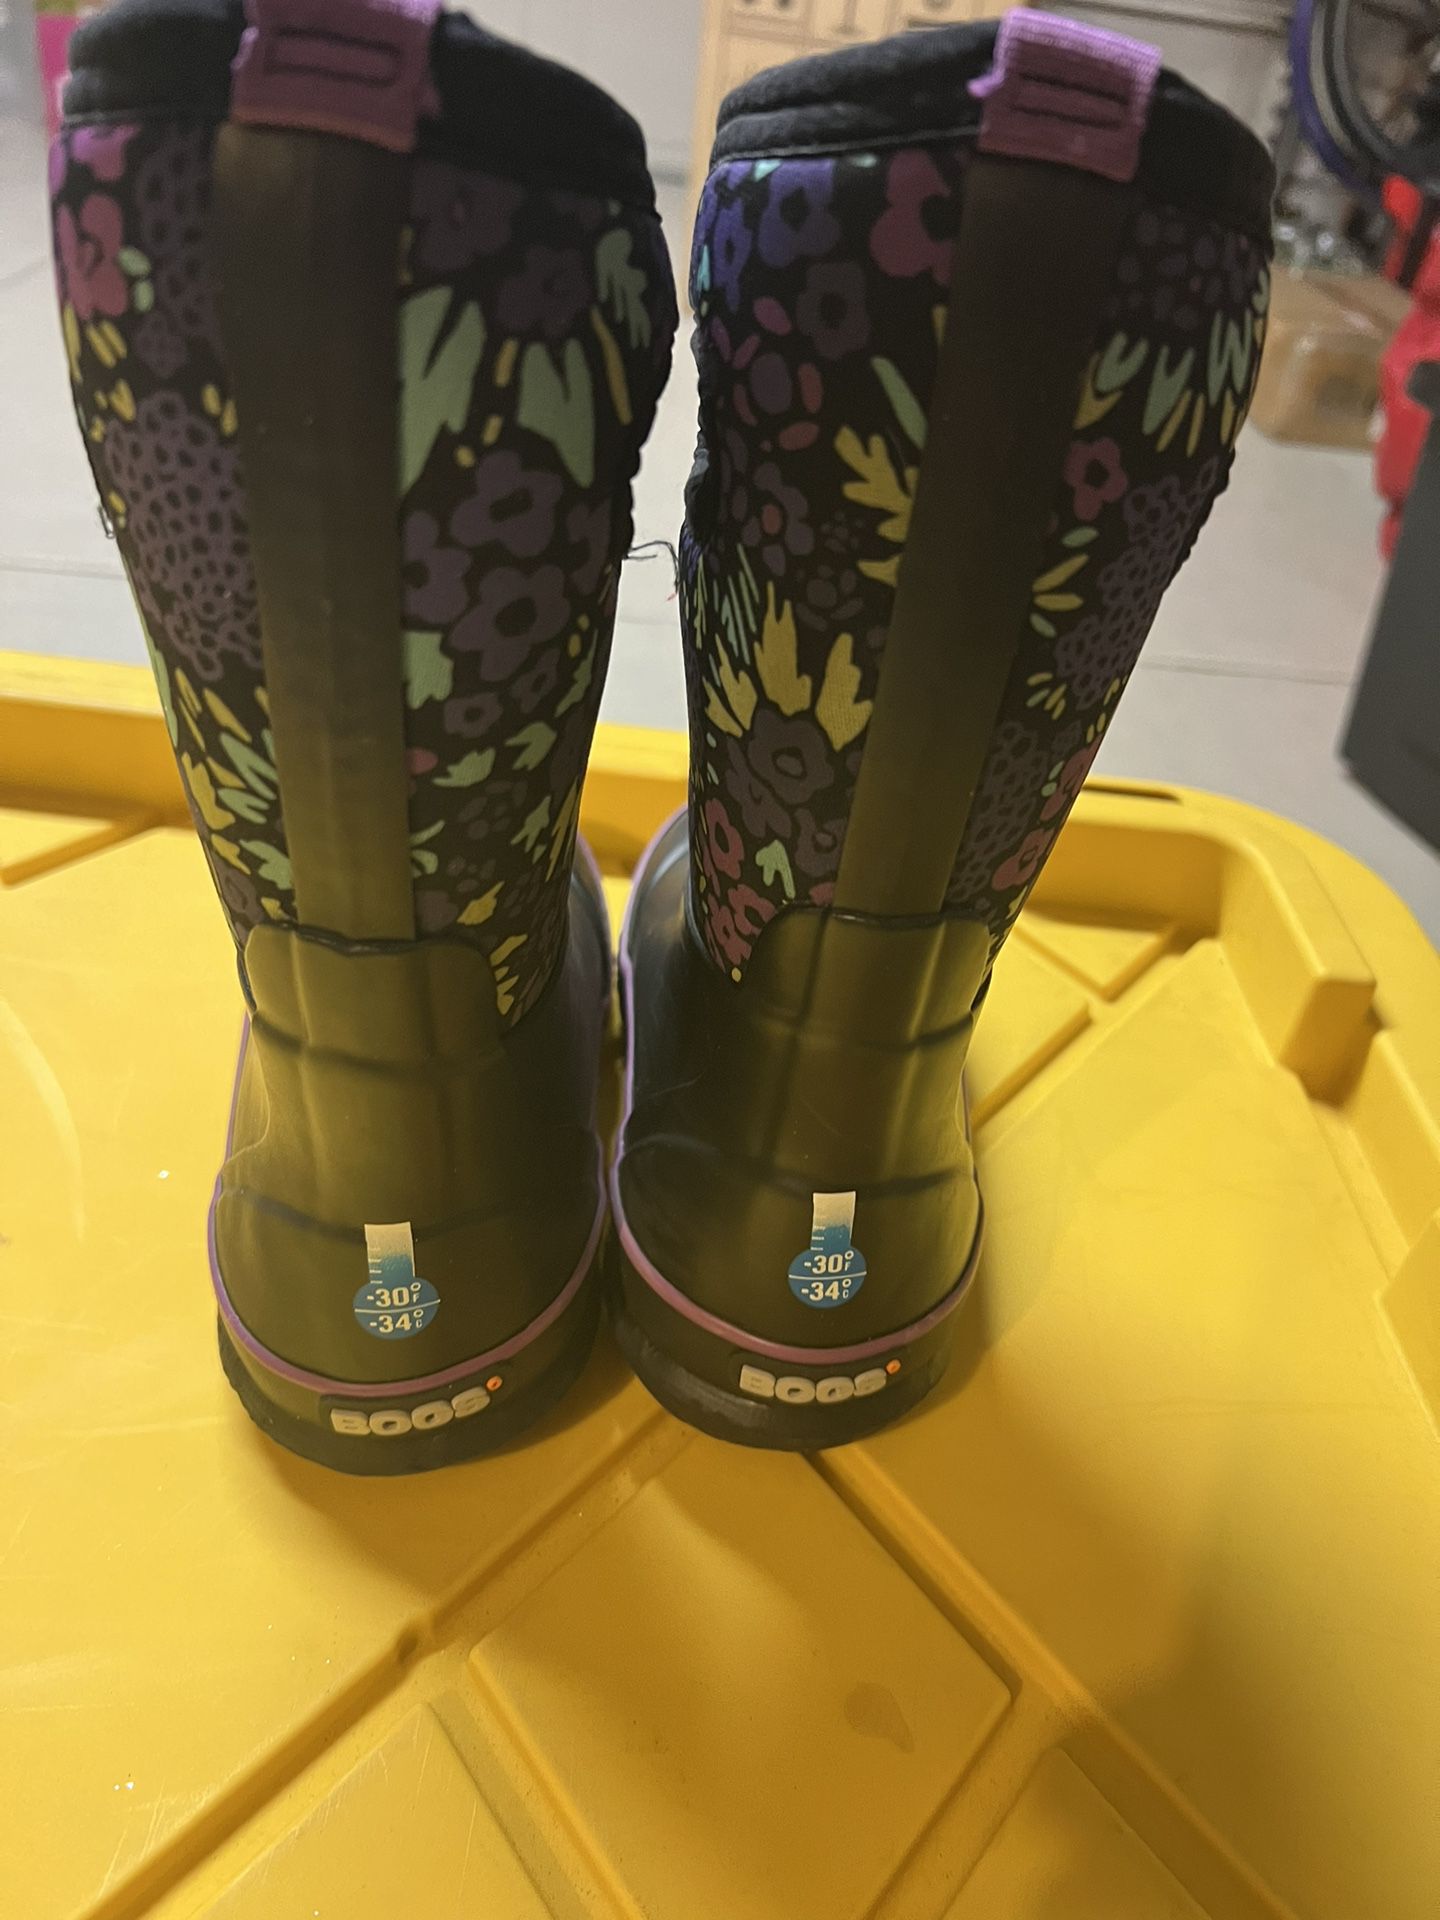 Size 12 BOGS weatherproof Snow/ Rain Boots